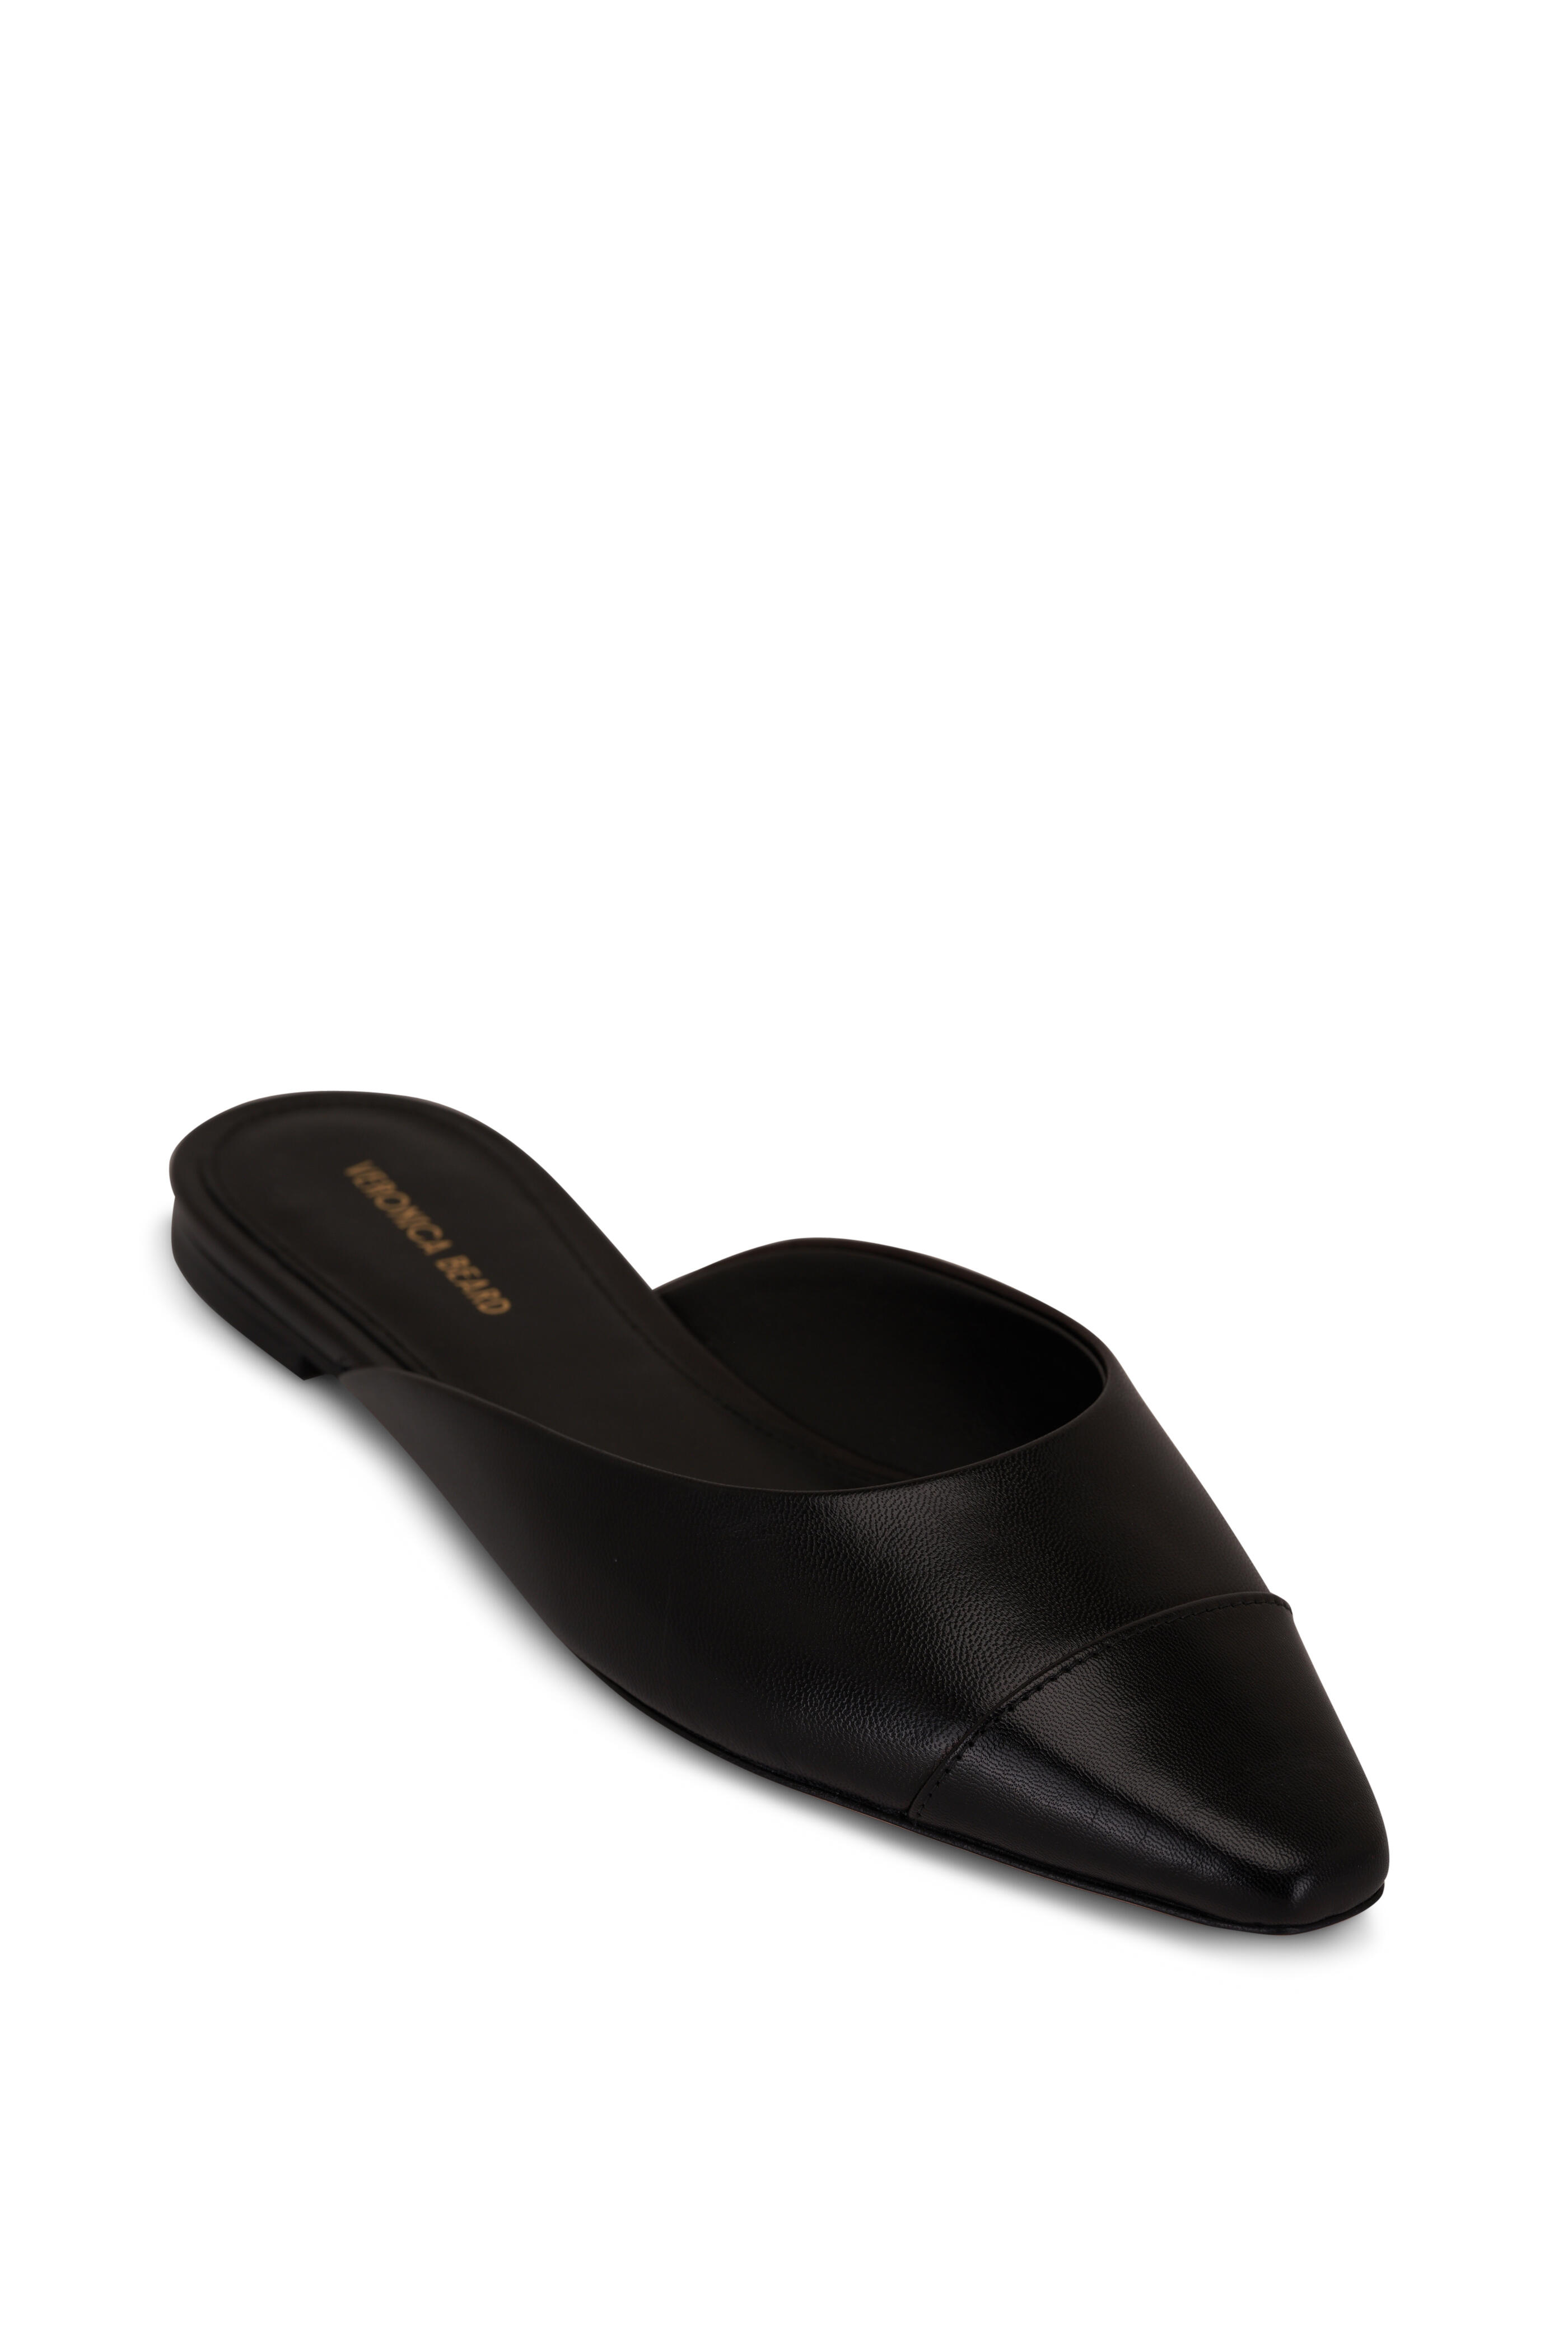 Veronica Beard Bera Chain Loafer Mules Black Size 8.5